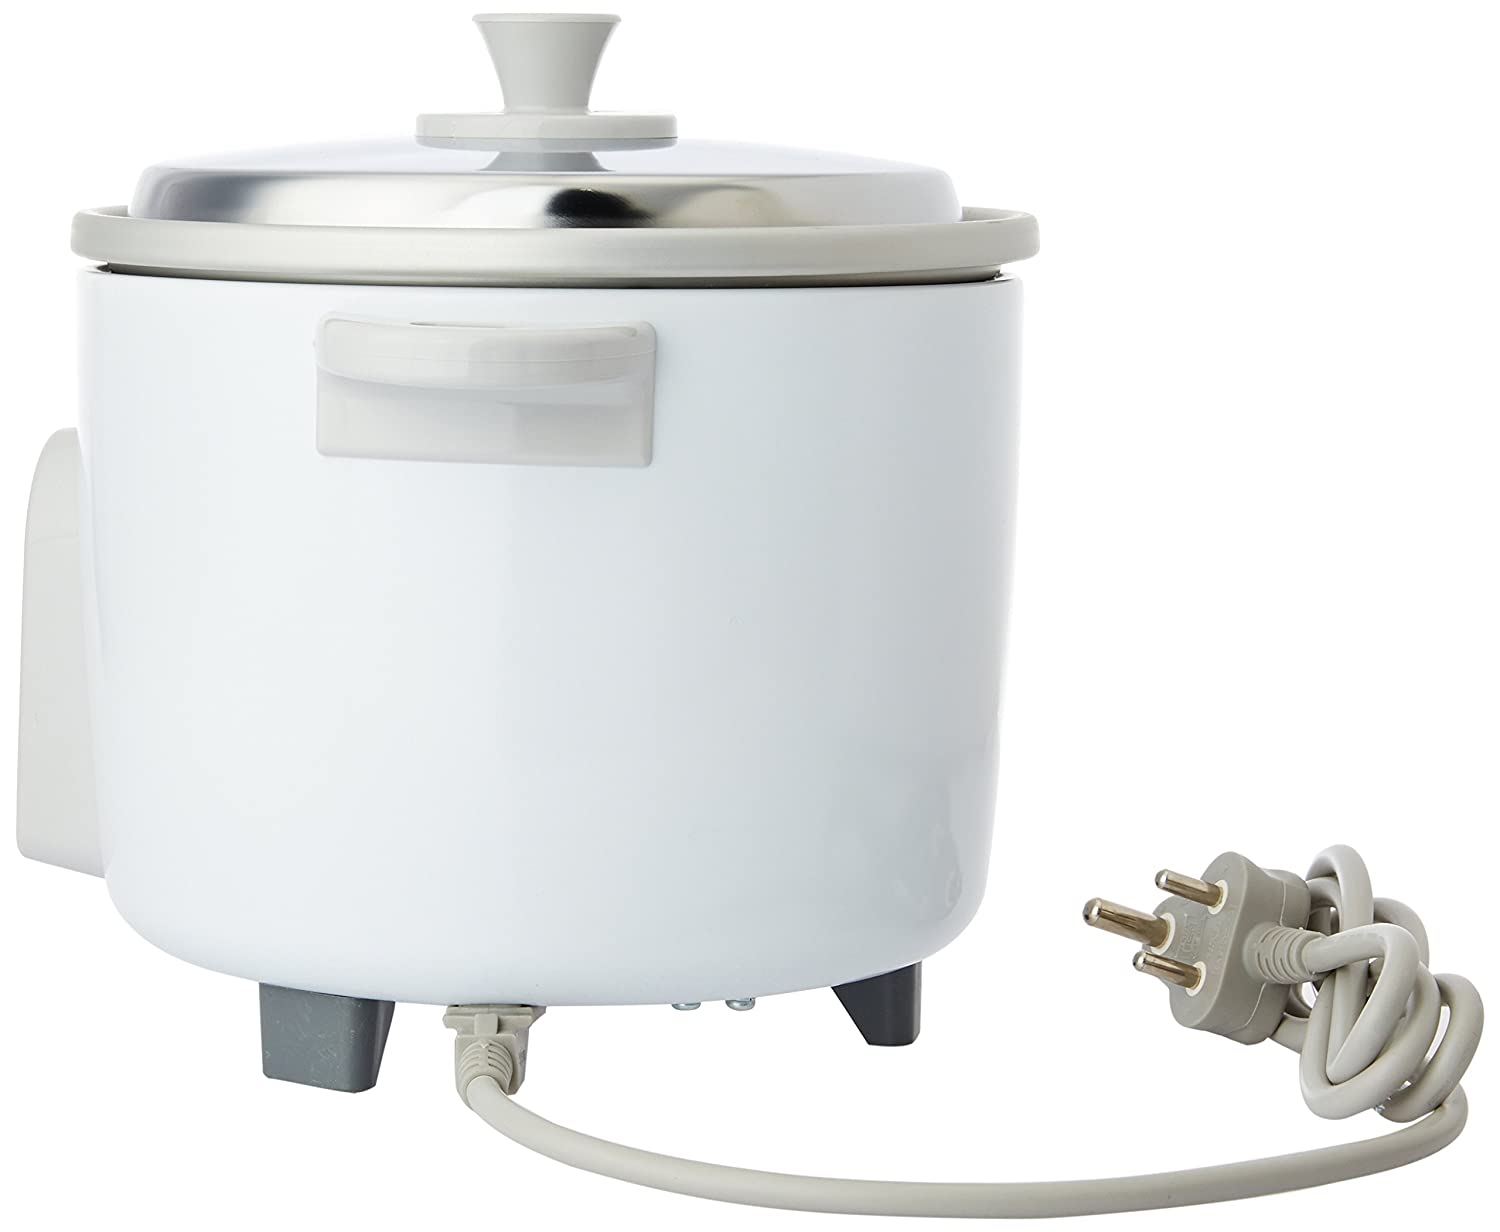 Panasonic Automatic Cooker SR-WA10 E White Colour 1 Liter Capacity 450W